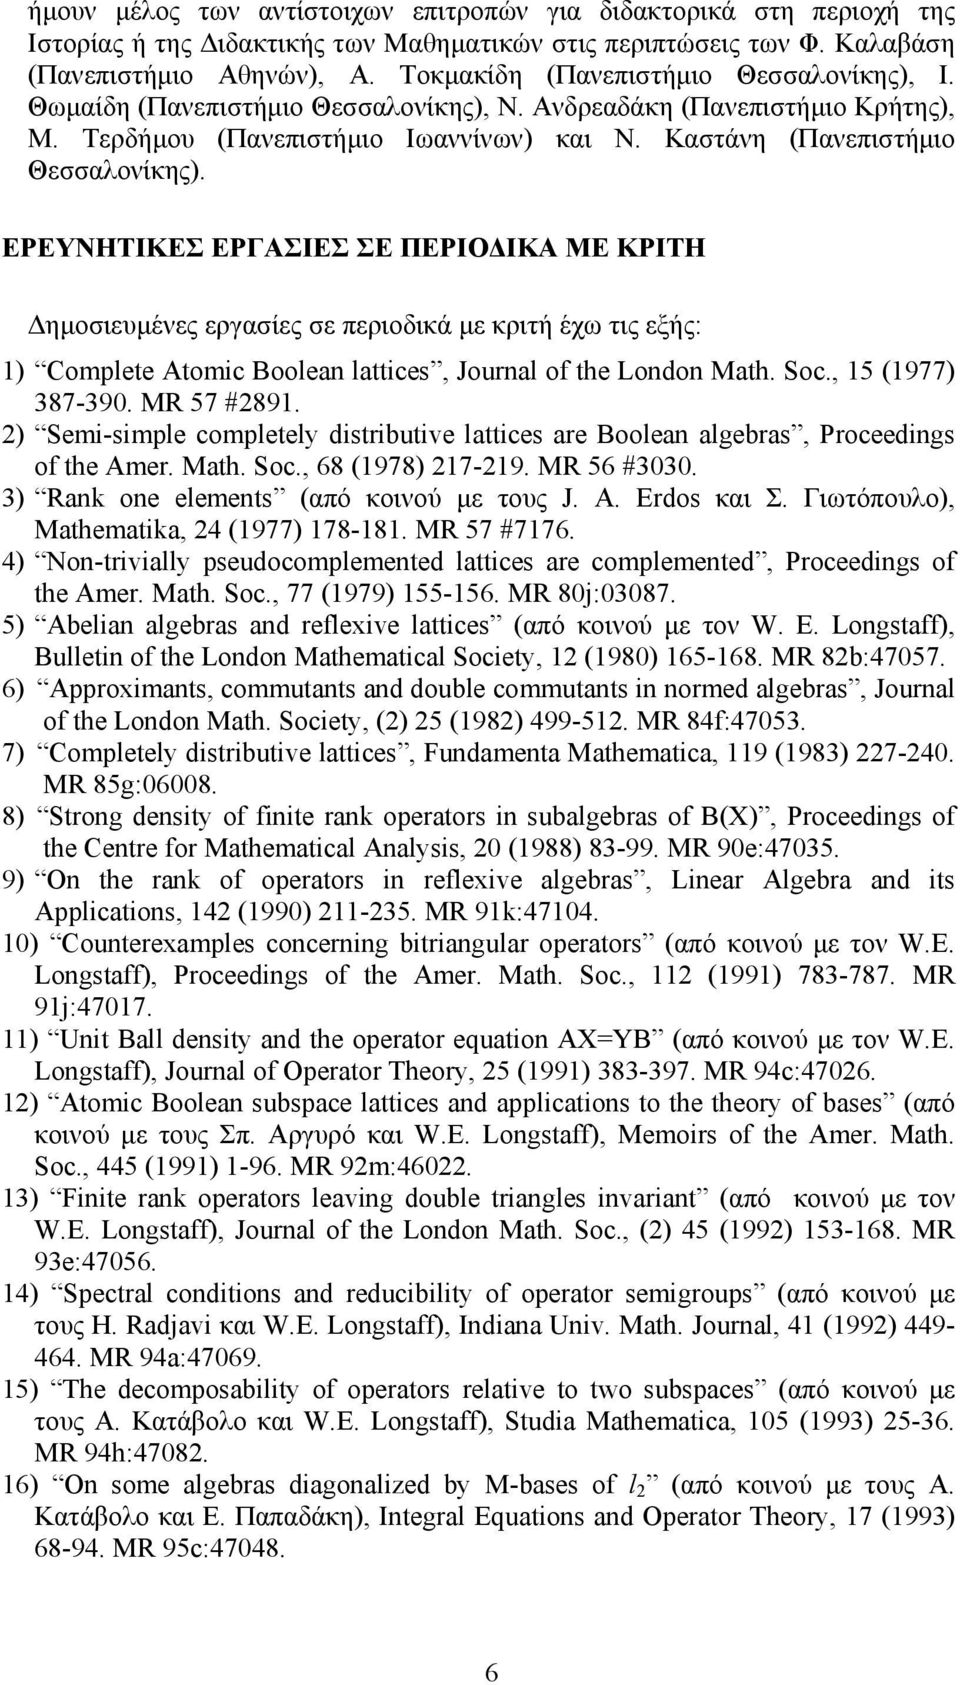 EPEYNHTIKEΣ EPΓAΣIEΣ ΣE ΠEPIO IKA ME KPITH ηµοσιευµένες εργασίες σε περιοδικά µε κριτή έχω τις εξής: 1) Complete Atomic Boolean lattices, Journal of the London Math. Soc., 15 (1977) 387-390.